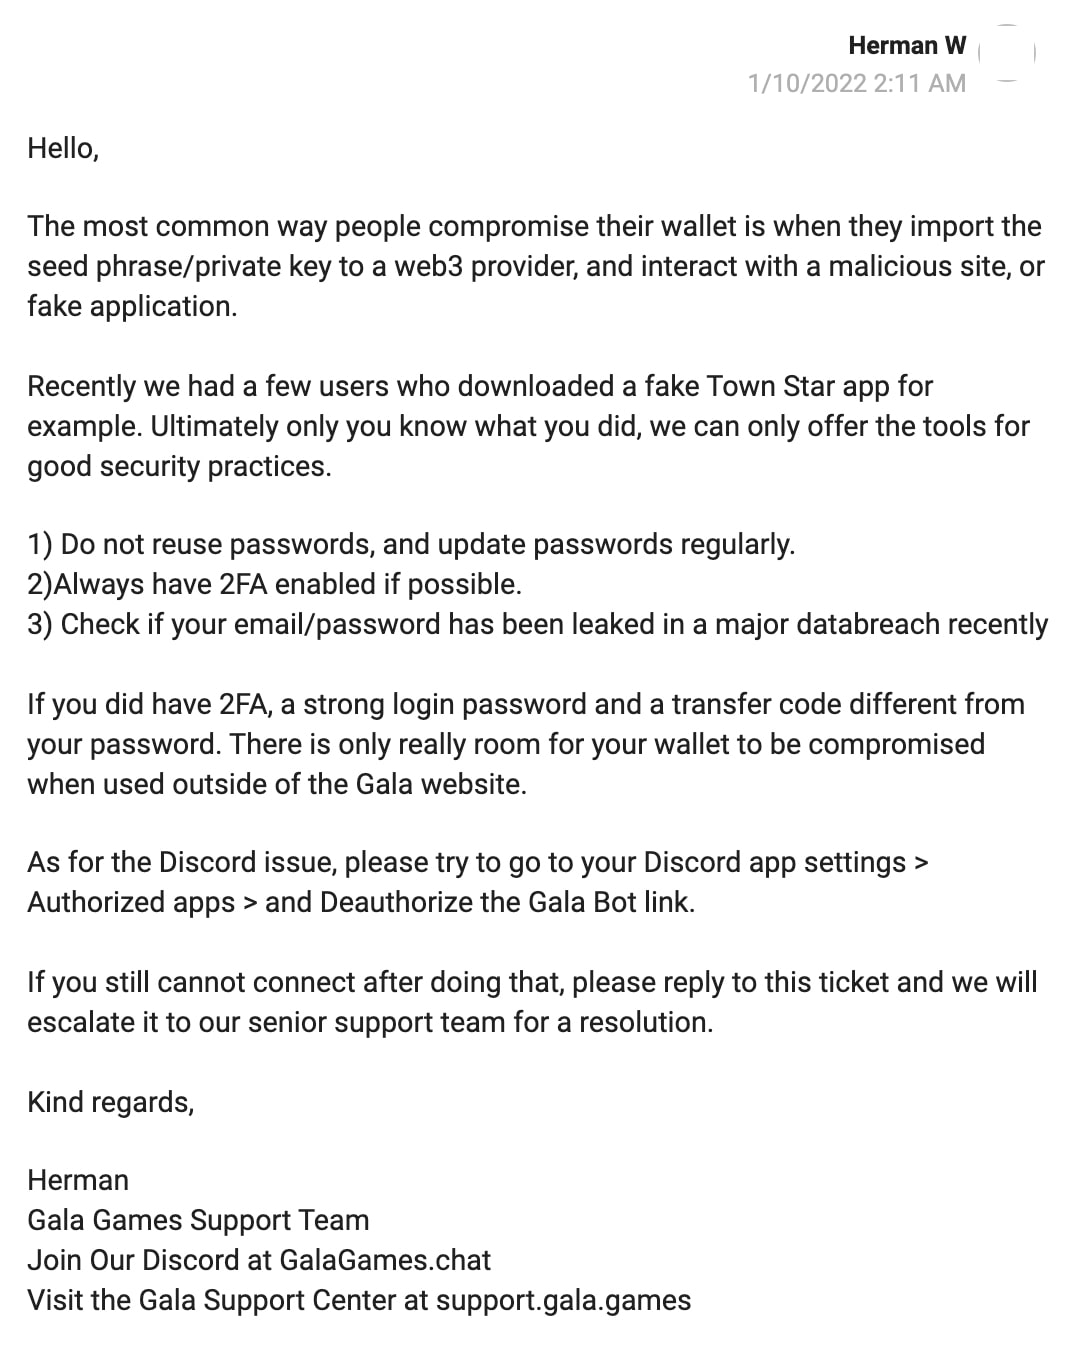 Gala Games email response to hack victim